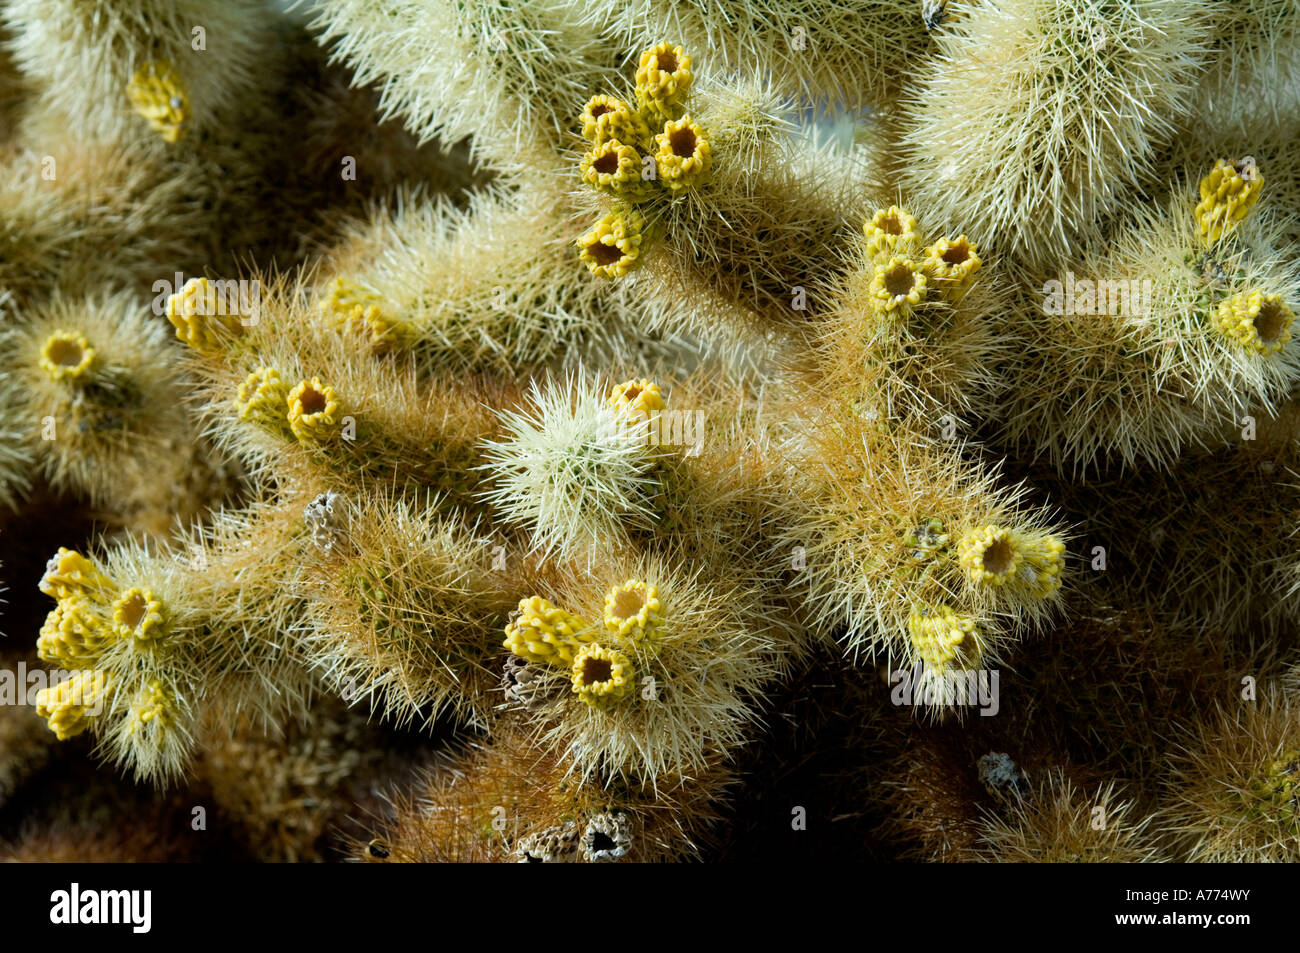 Cholla cactus Opuntia bigelovii Joshua Tree National Park - California - USA Stock Photo